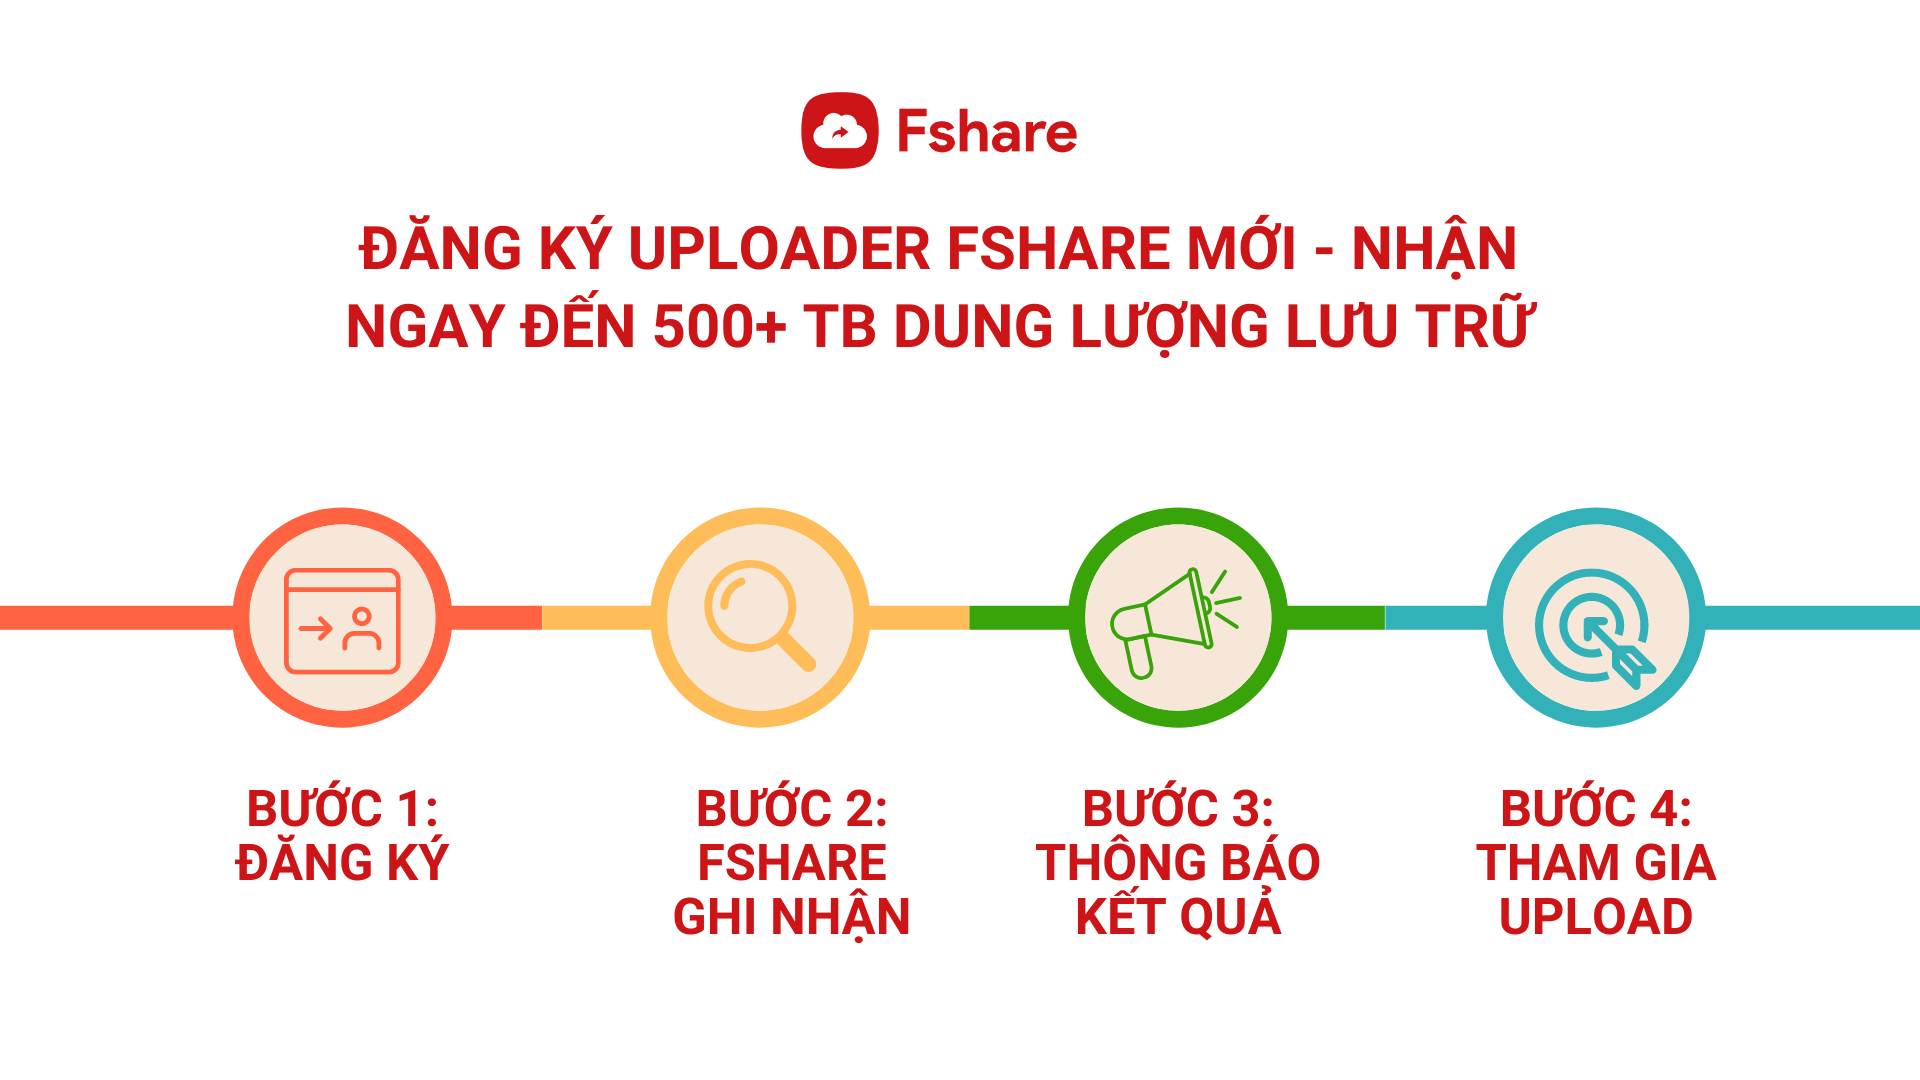 Fshare-tang-500TB-dung-luong-luu-tru.png